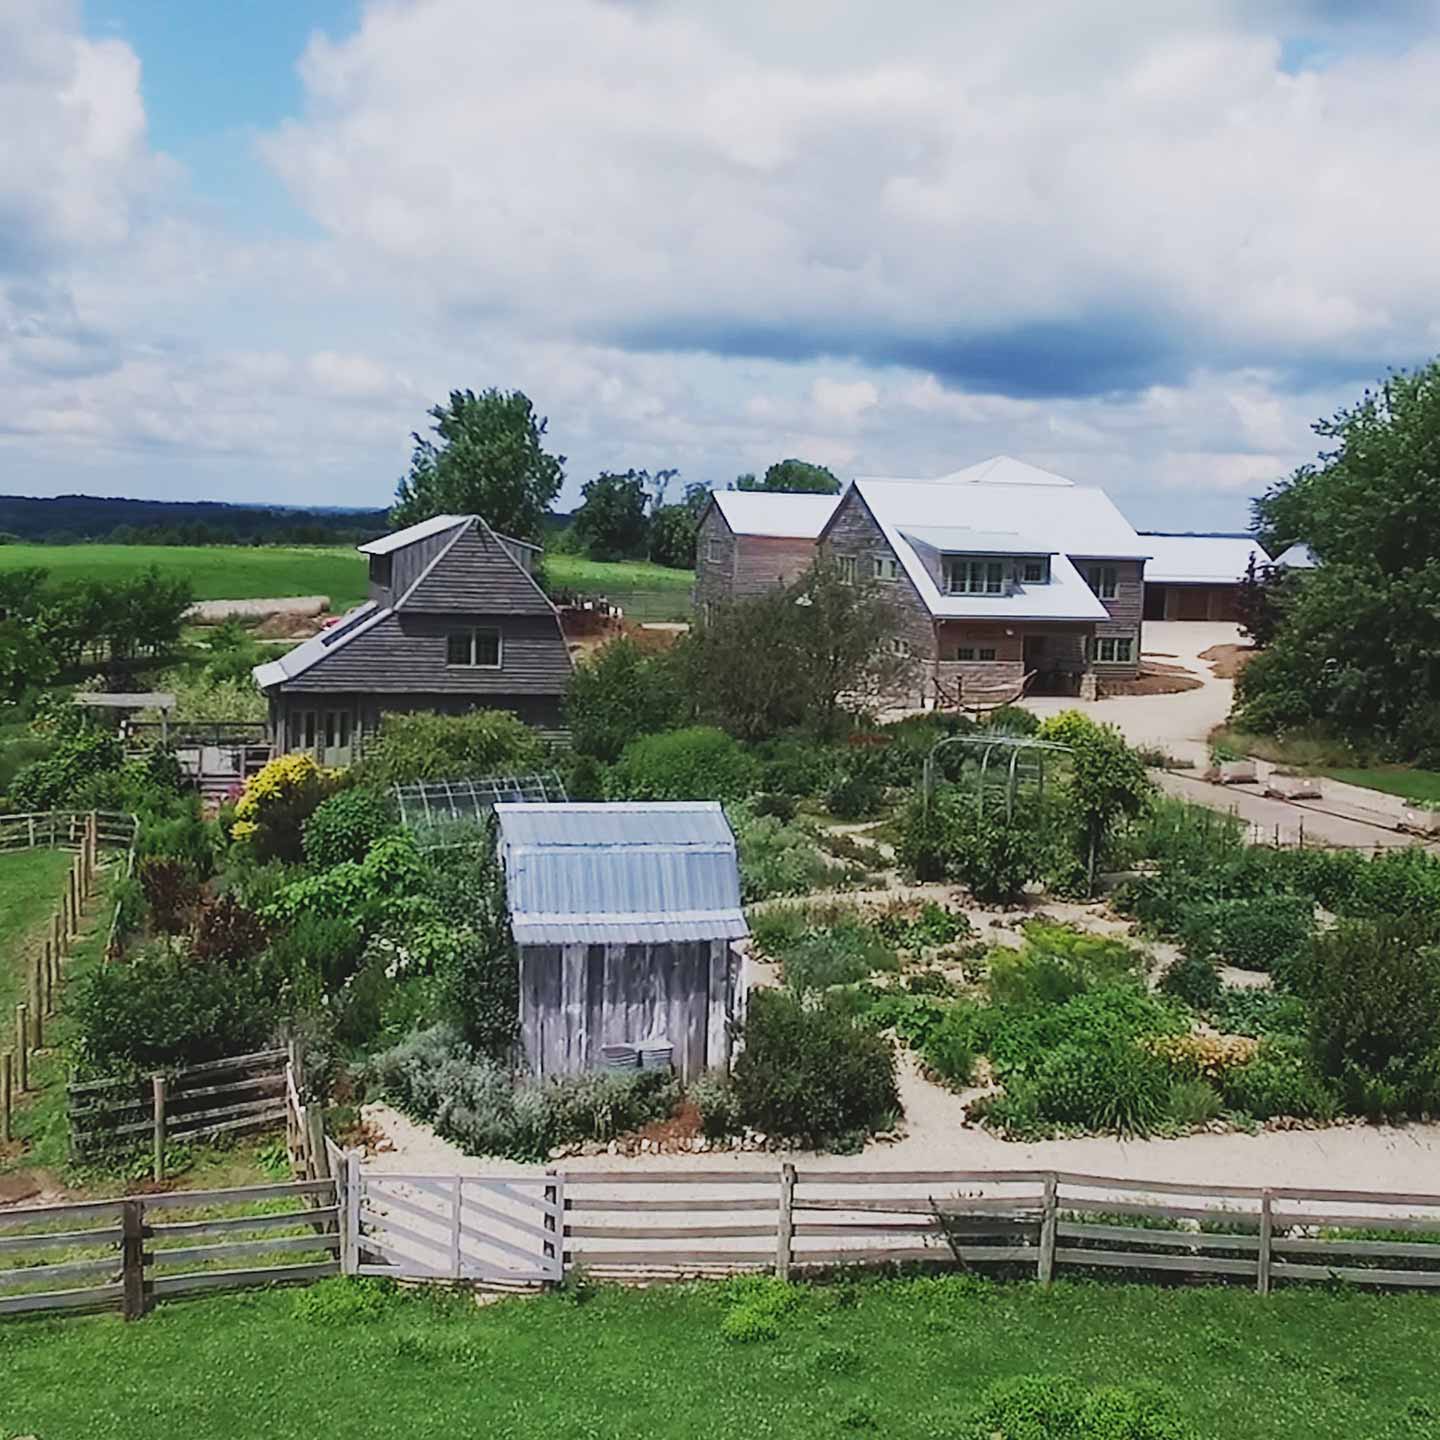 Our Farm, Our Home